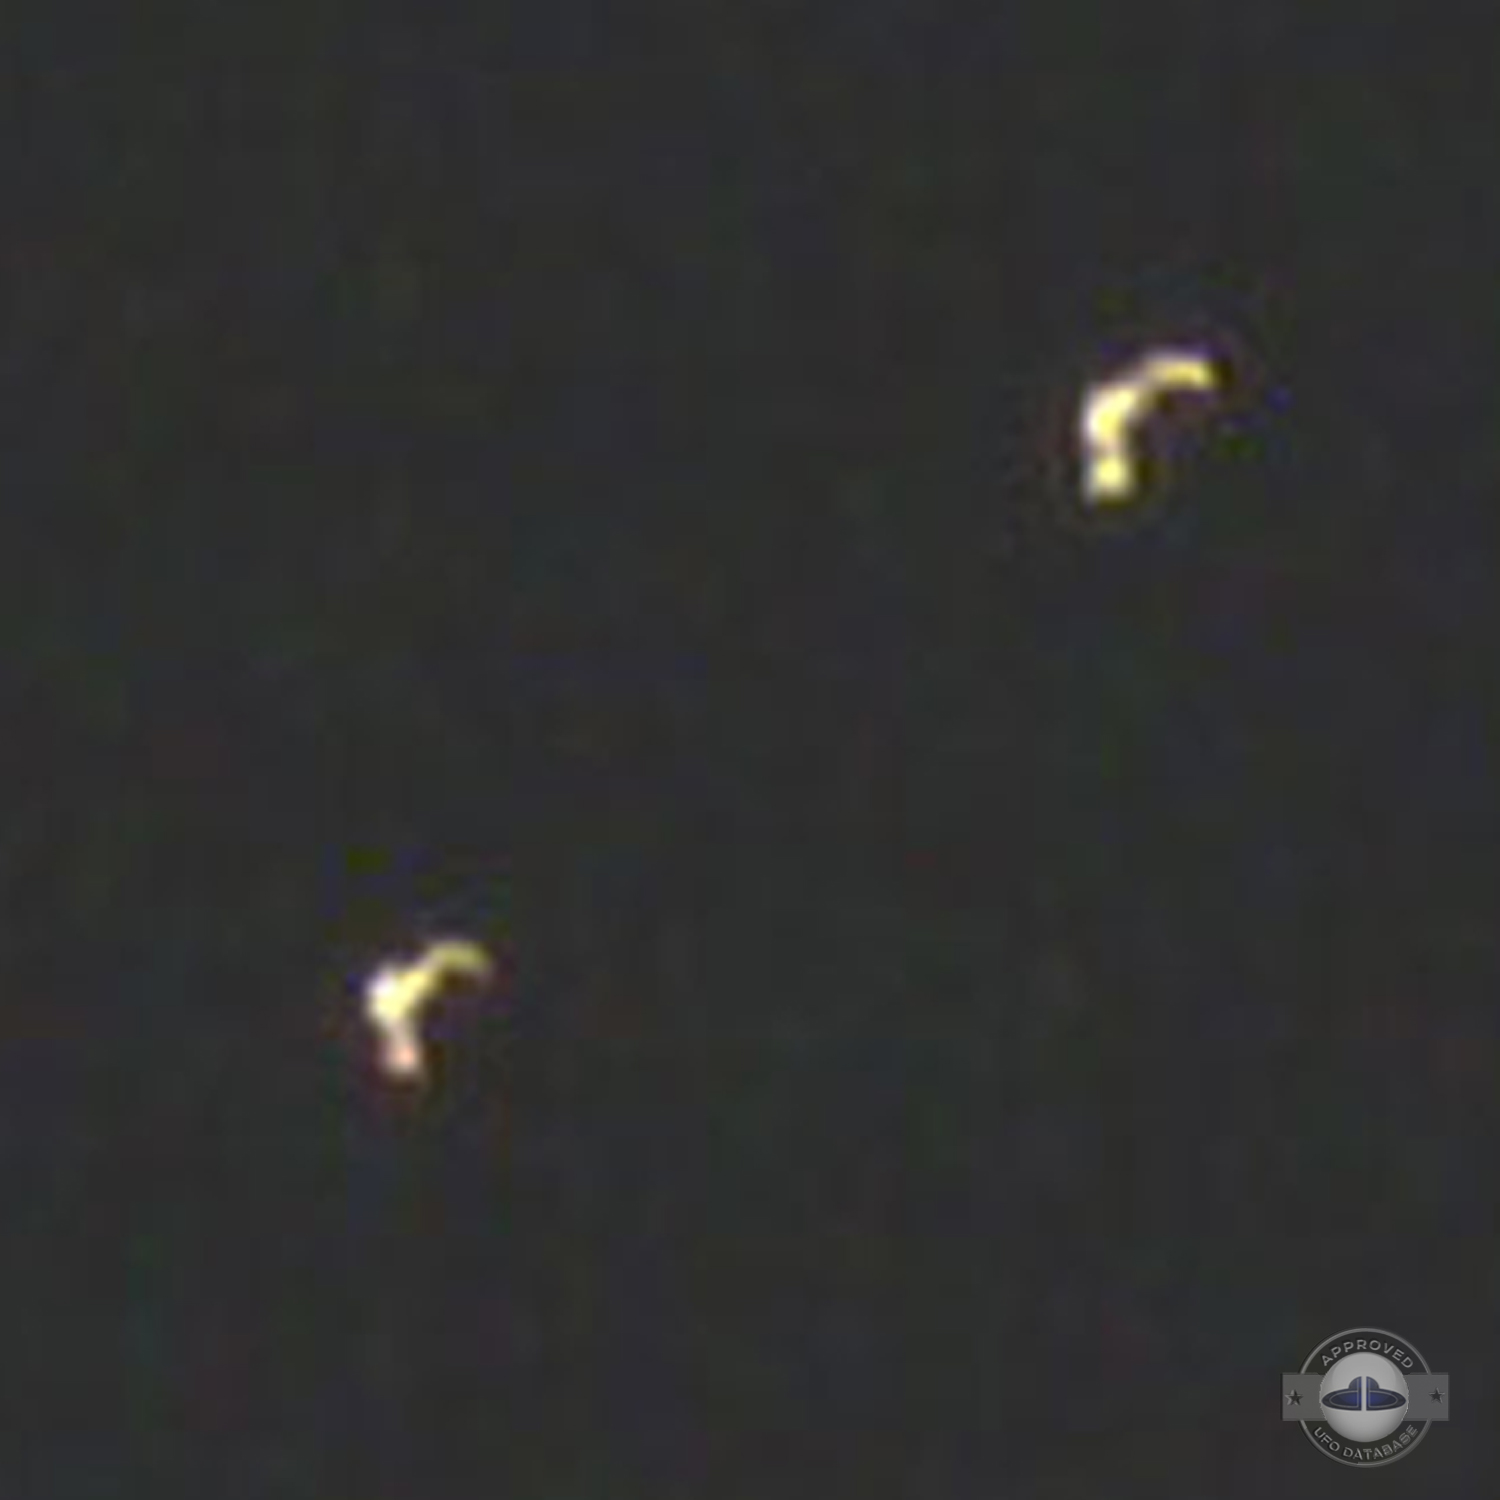 Fleet of three Boomerang UFOs passing over Granados, Mexico 2012 UFO Picture #476-4